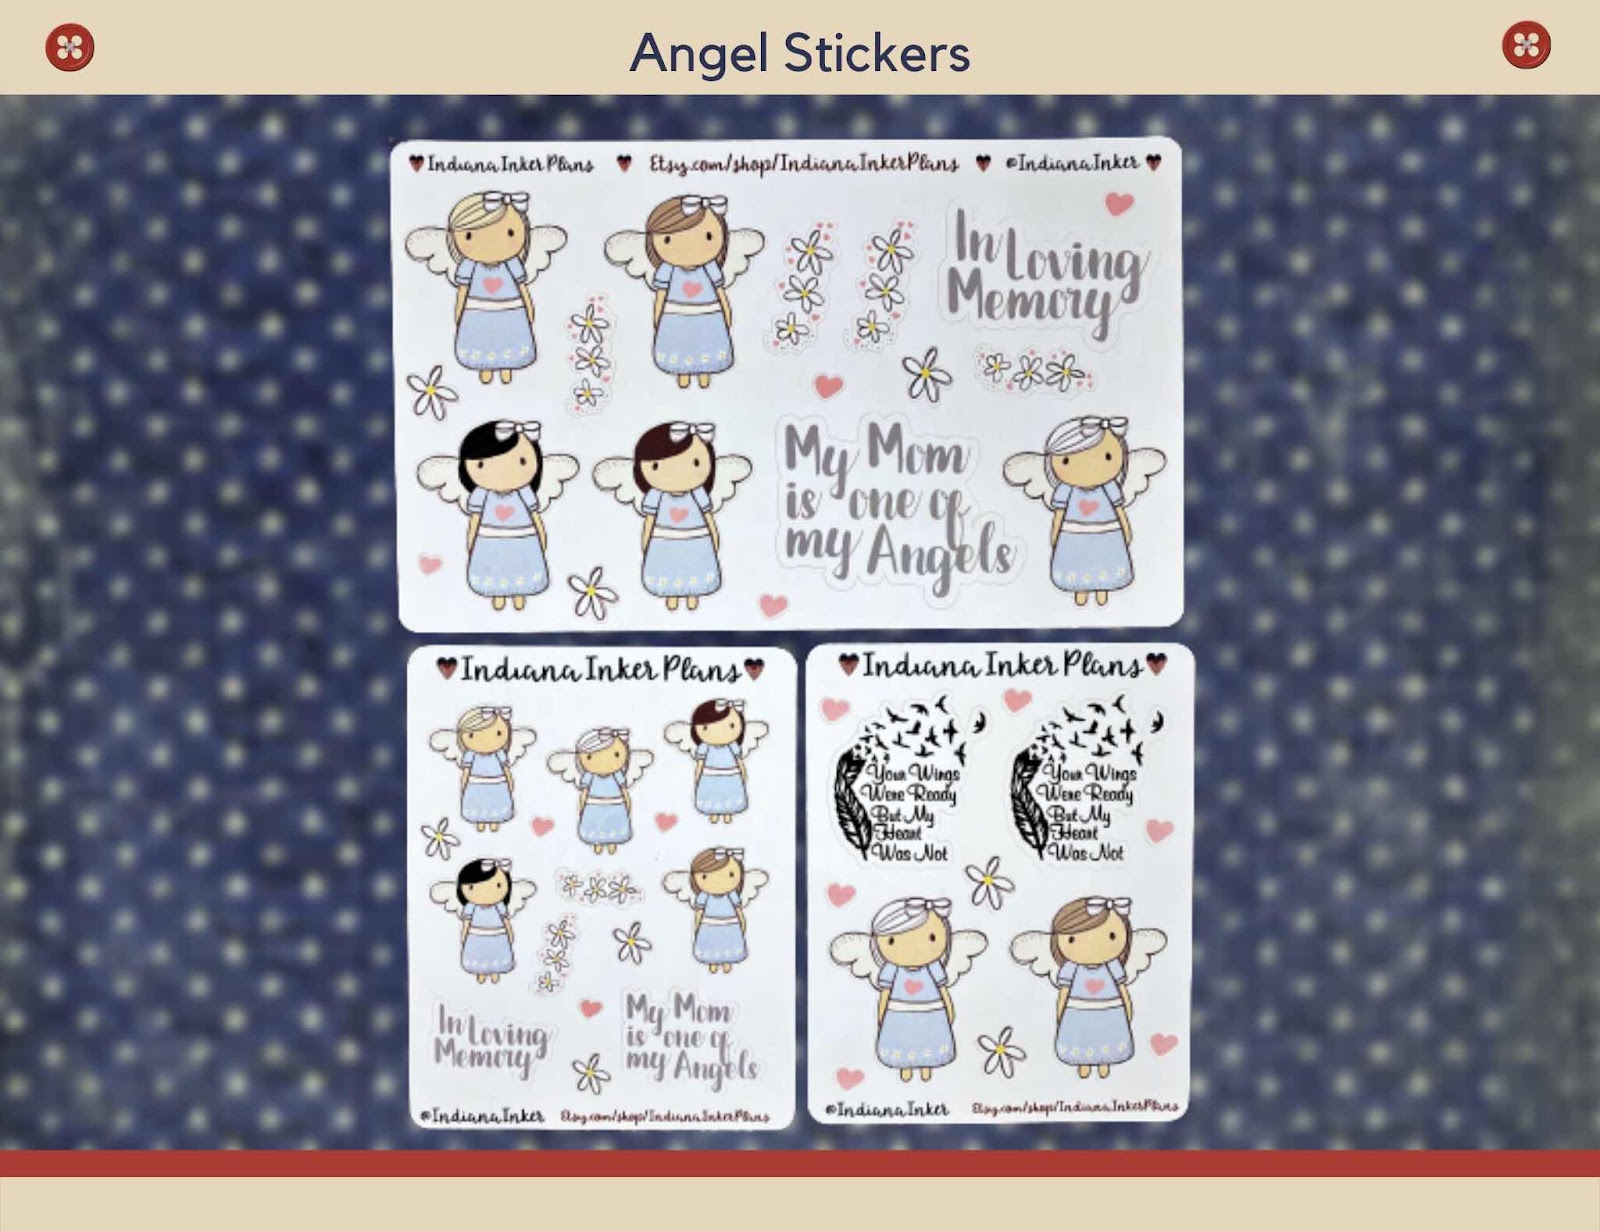 Angel stickers